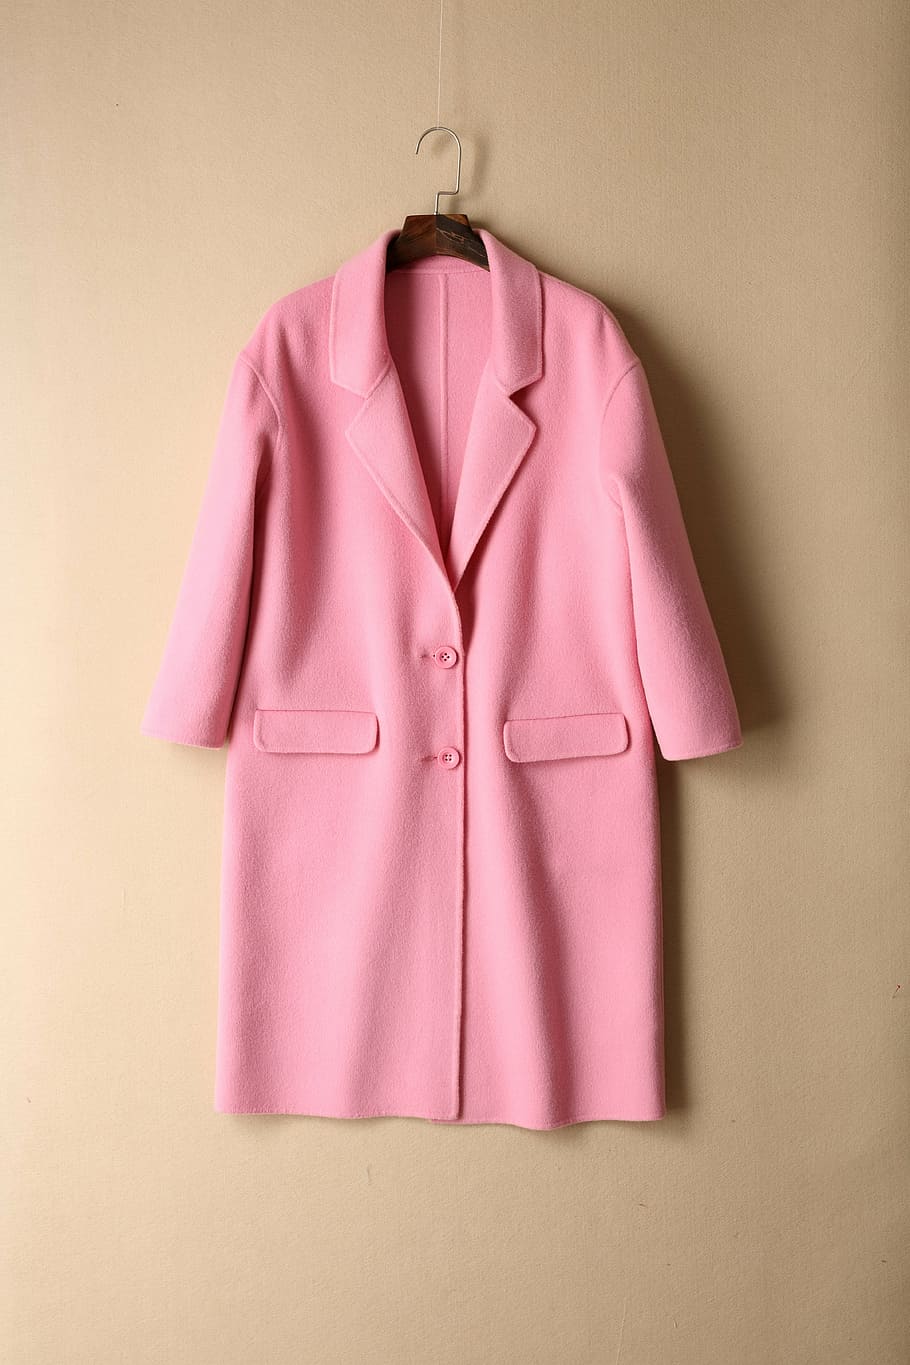 hanging, pink, coat, hanger, clothing, loading, figure, fashion, wear, pattern